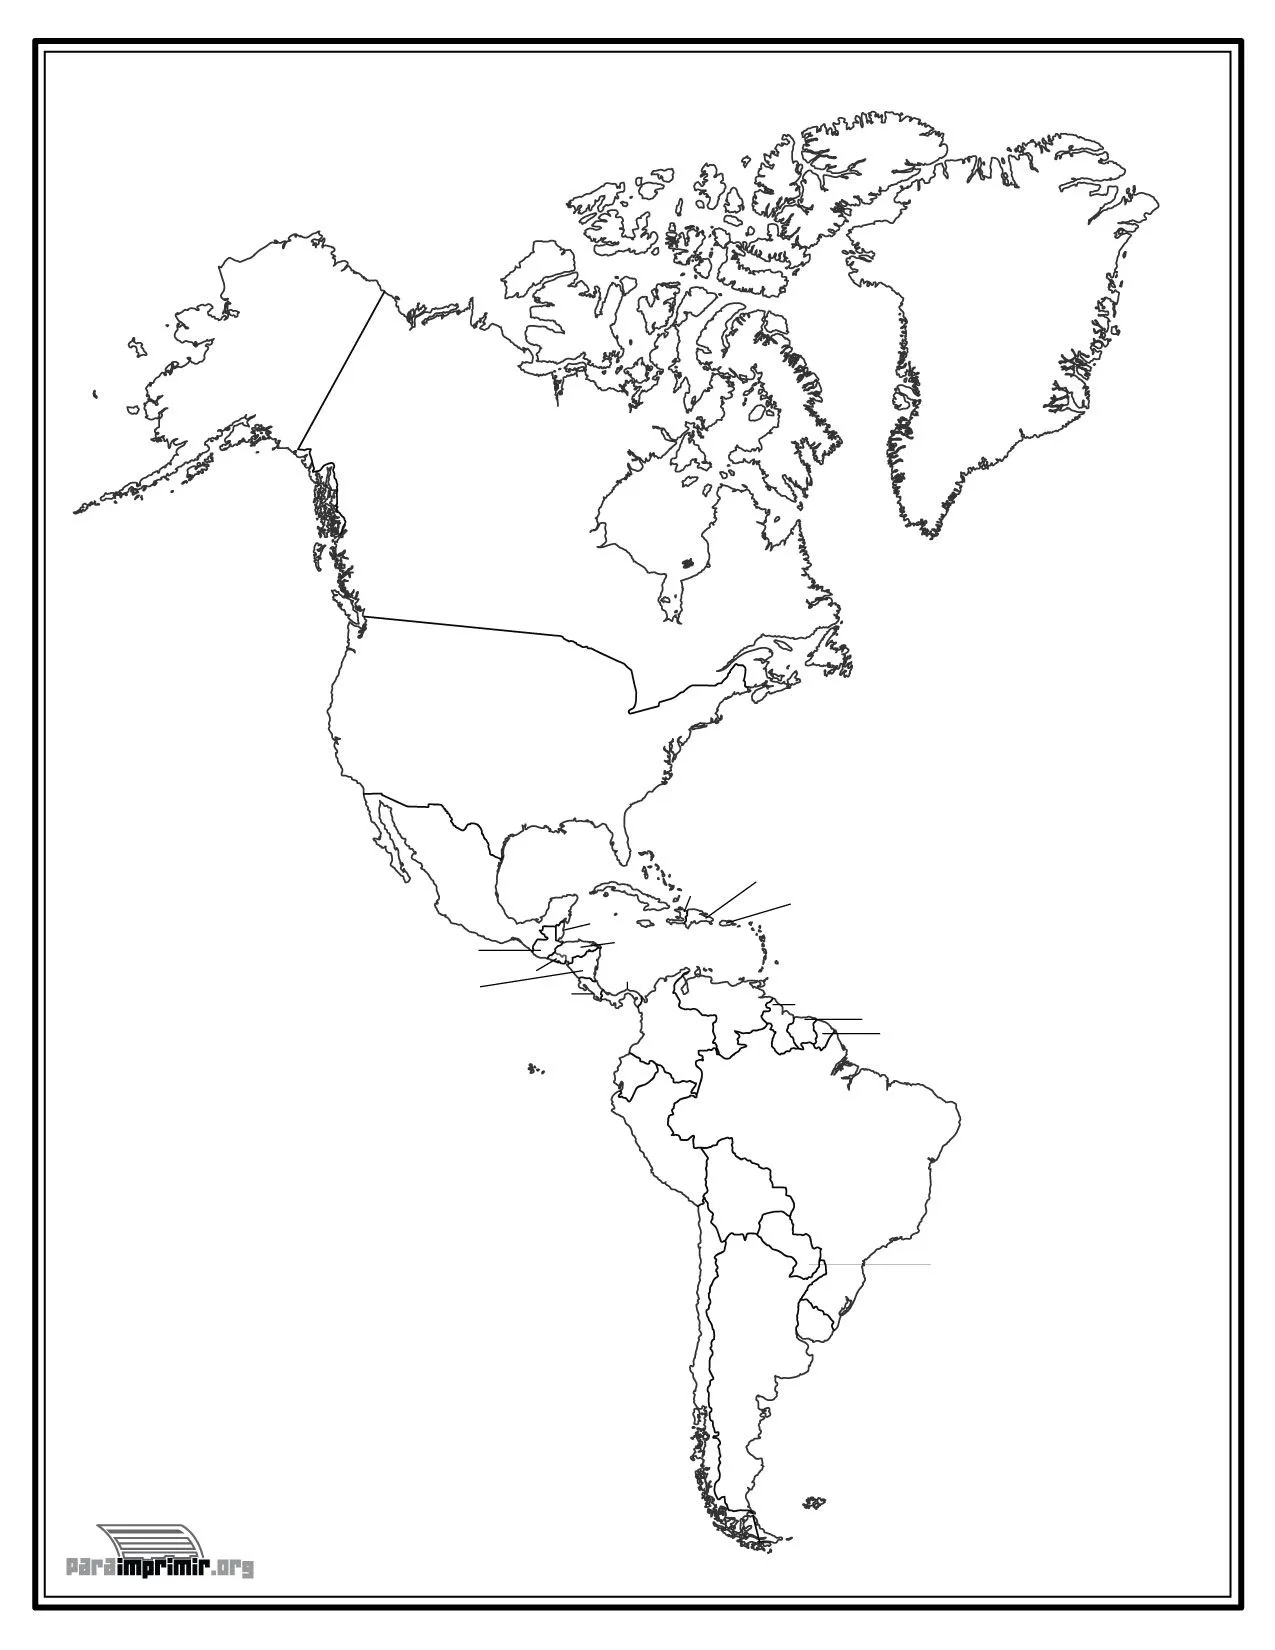 Mapa de América con división política sin nombres para imprimir